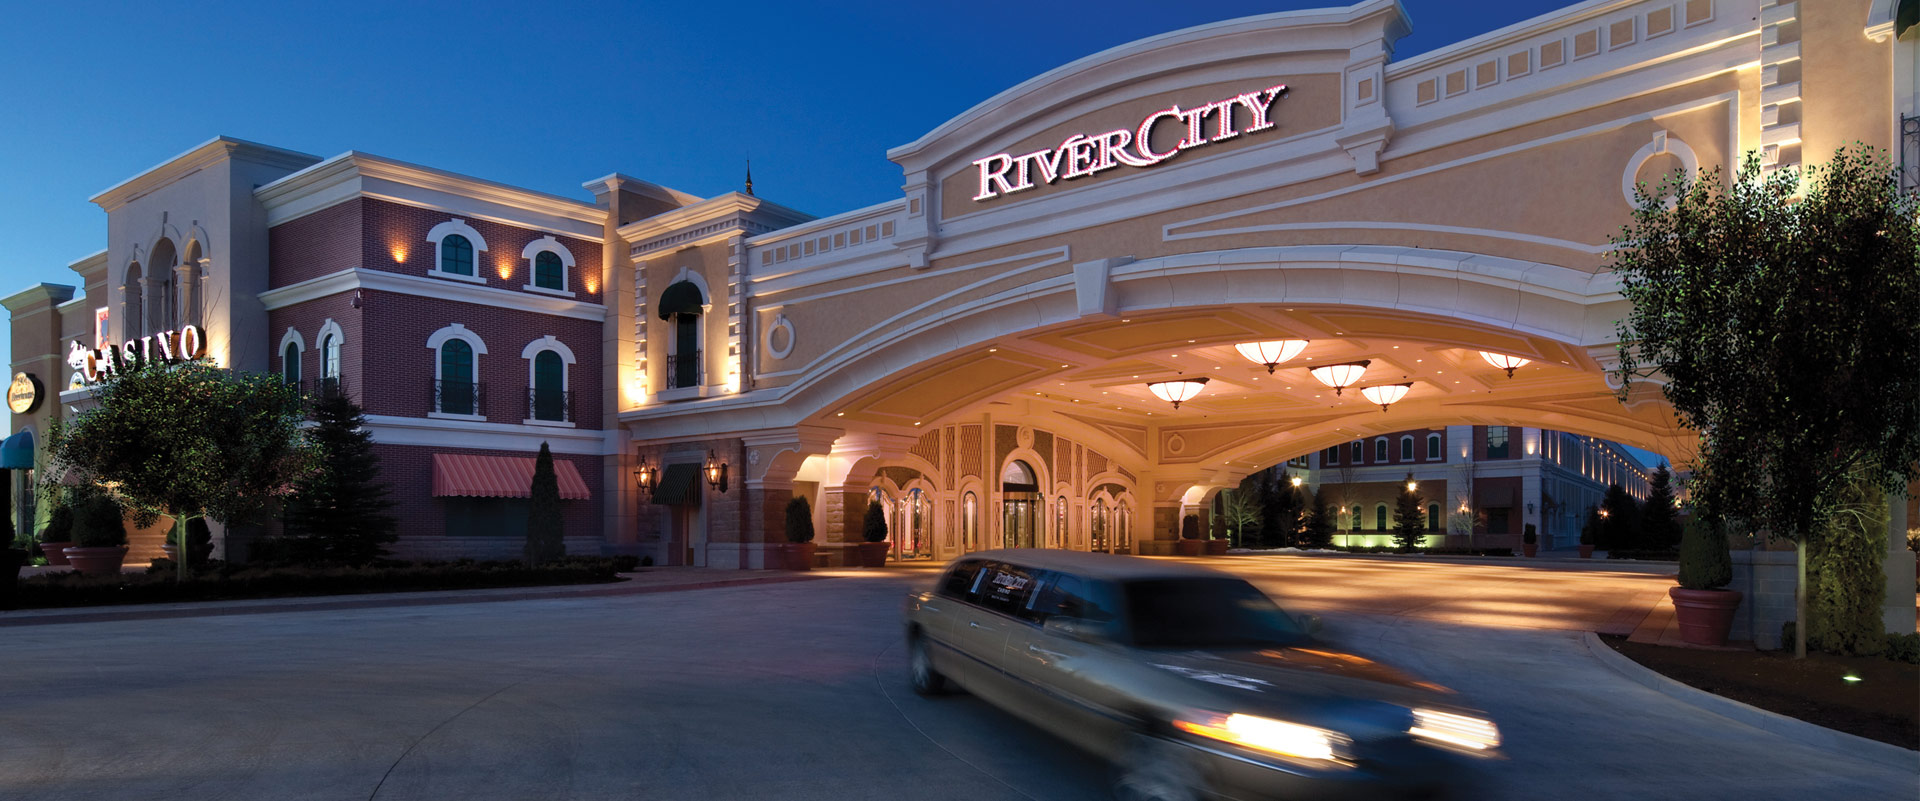 River City Casino in St. Louis. Missouri